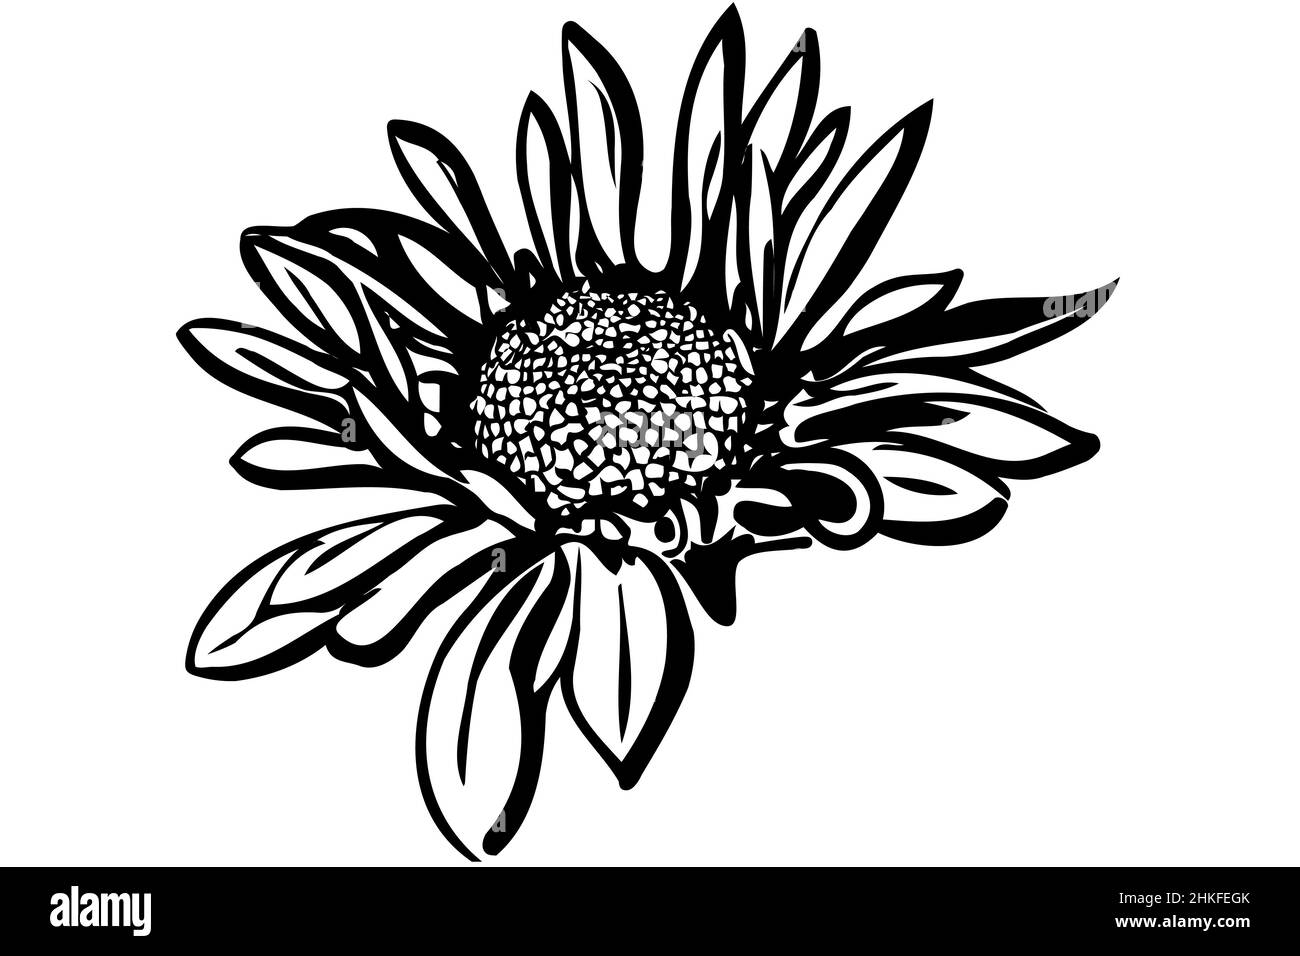 vector image of a beautiful autumn flower chrysanthemum Stock Photo